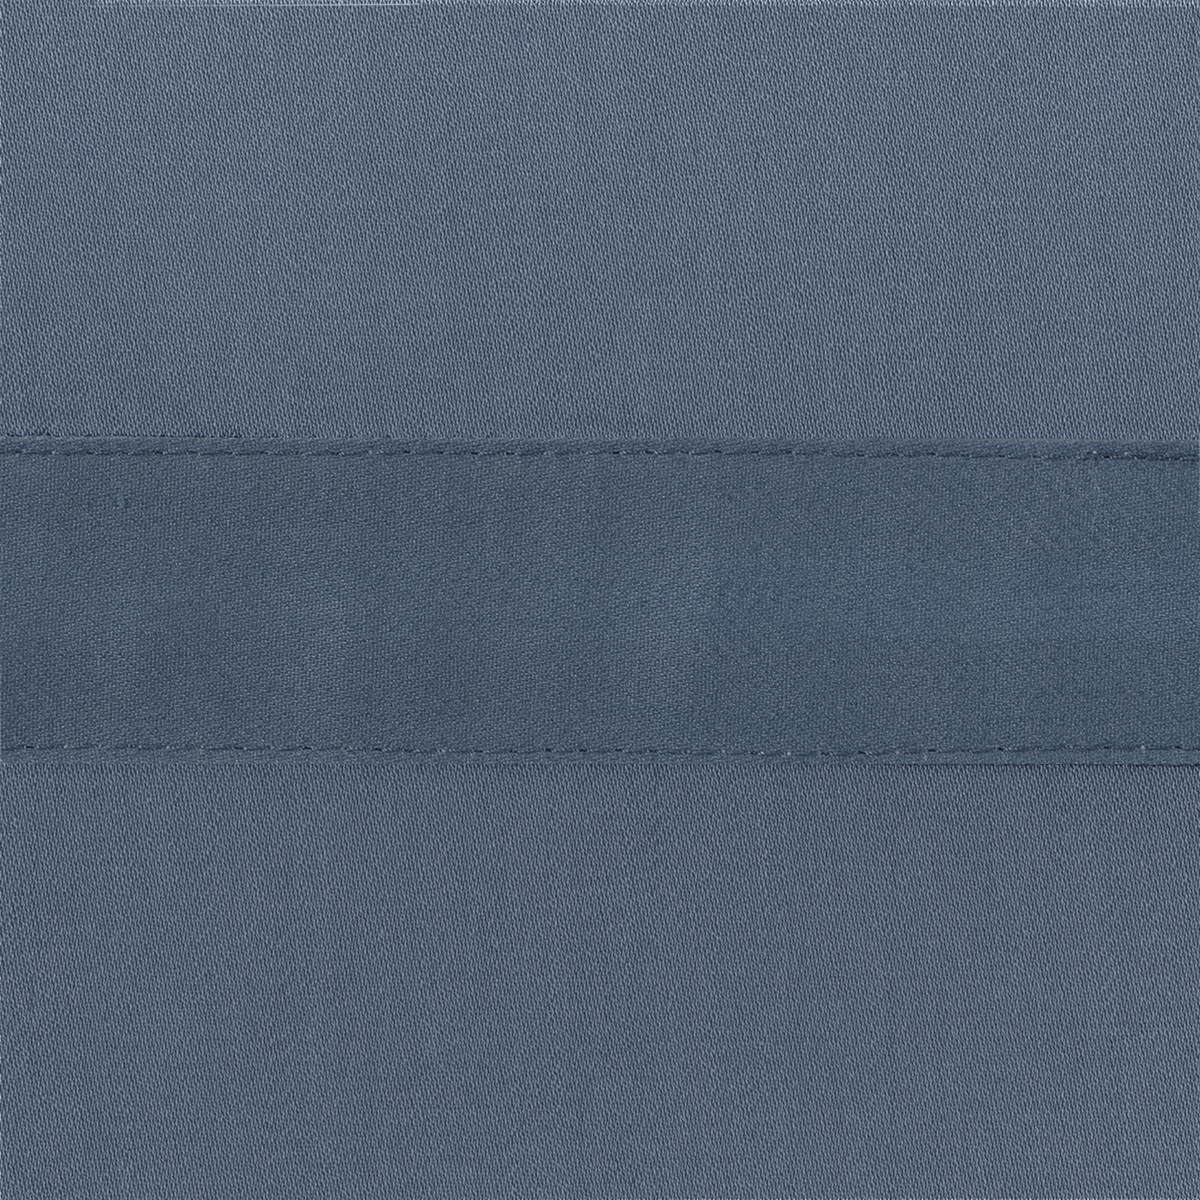 Closeup of Matouk Nocturne Bedding Fabric in Steel Blue Color